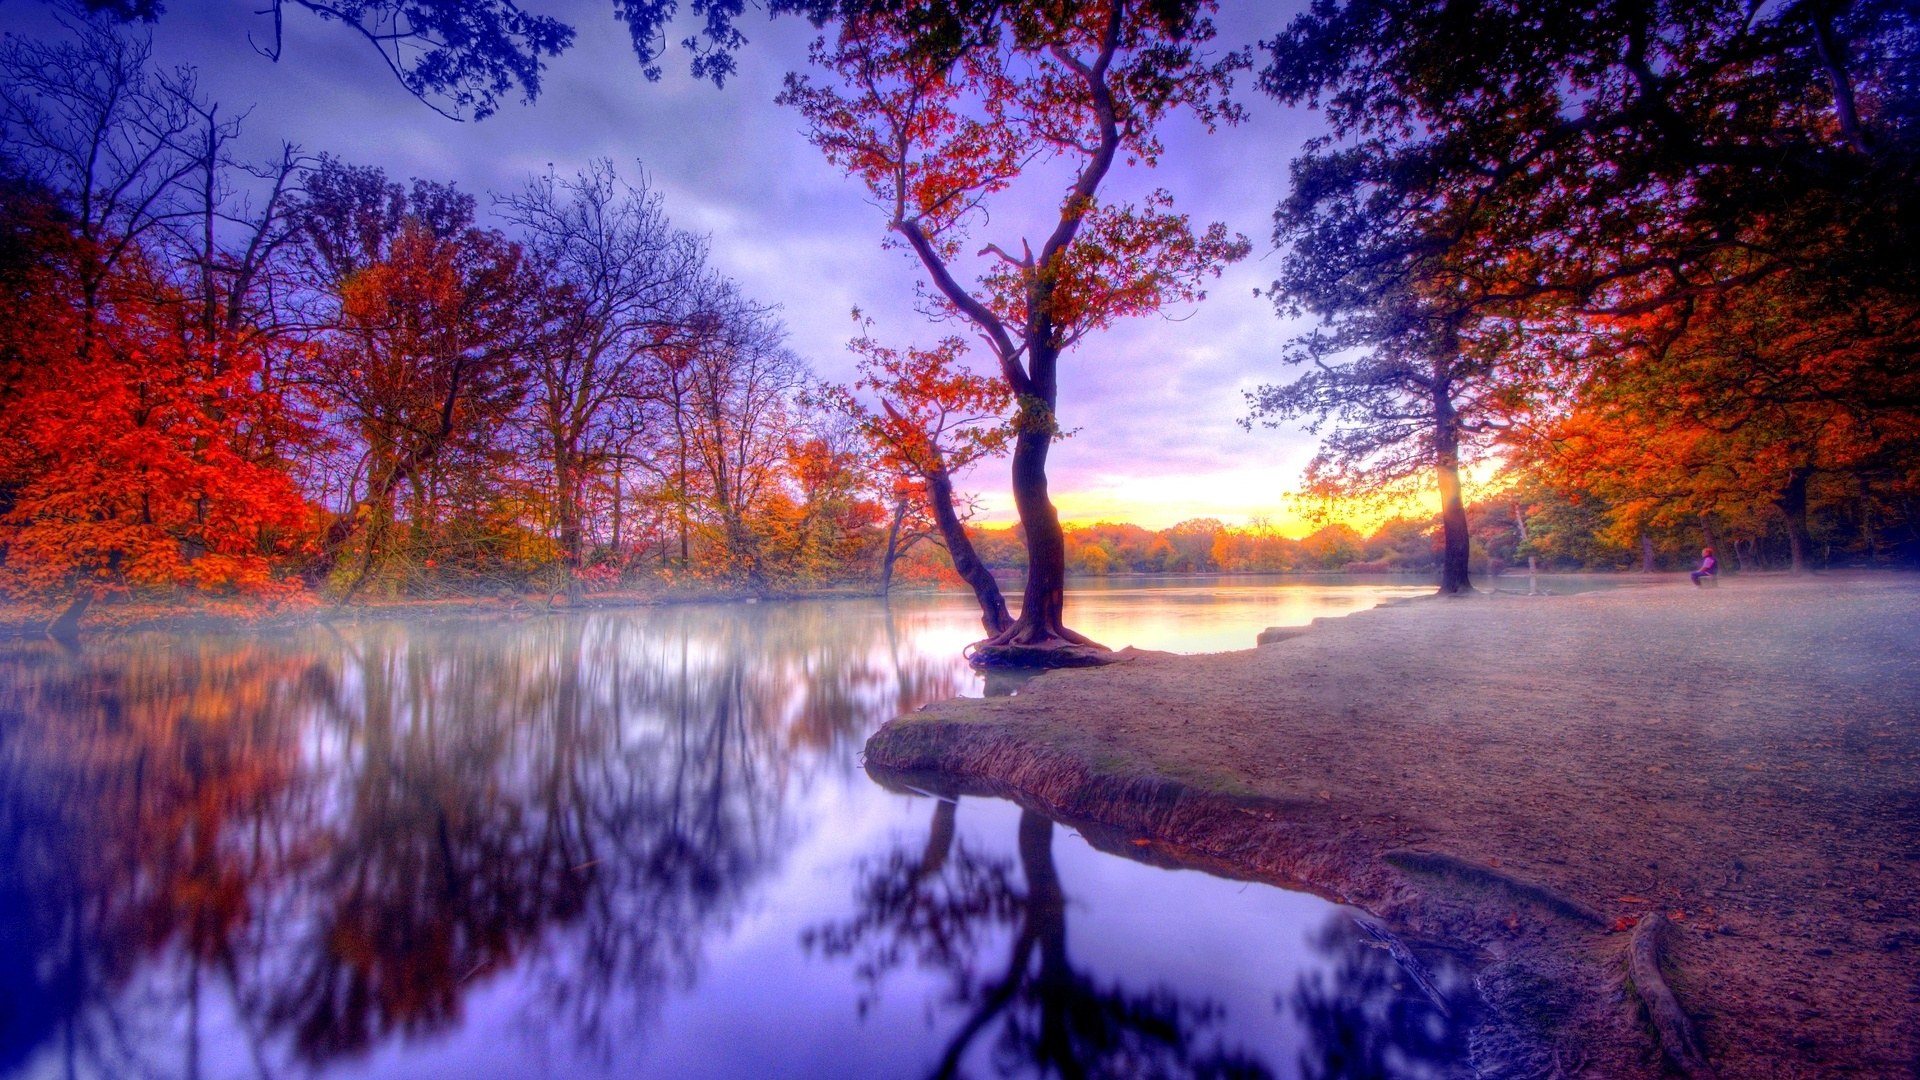 🔥 Download Autumn Landscape Full HD Desktop Wallpaper 1080p by erinc